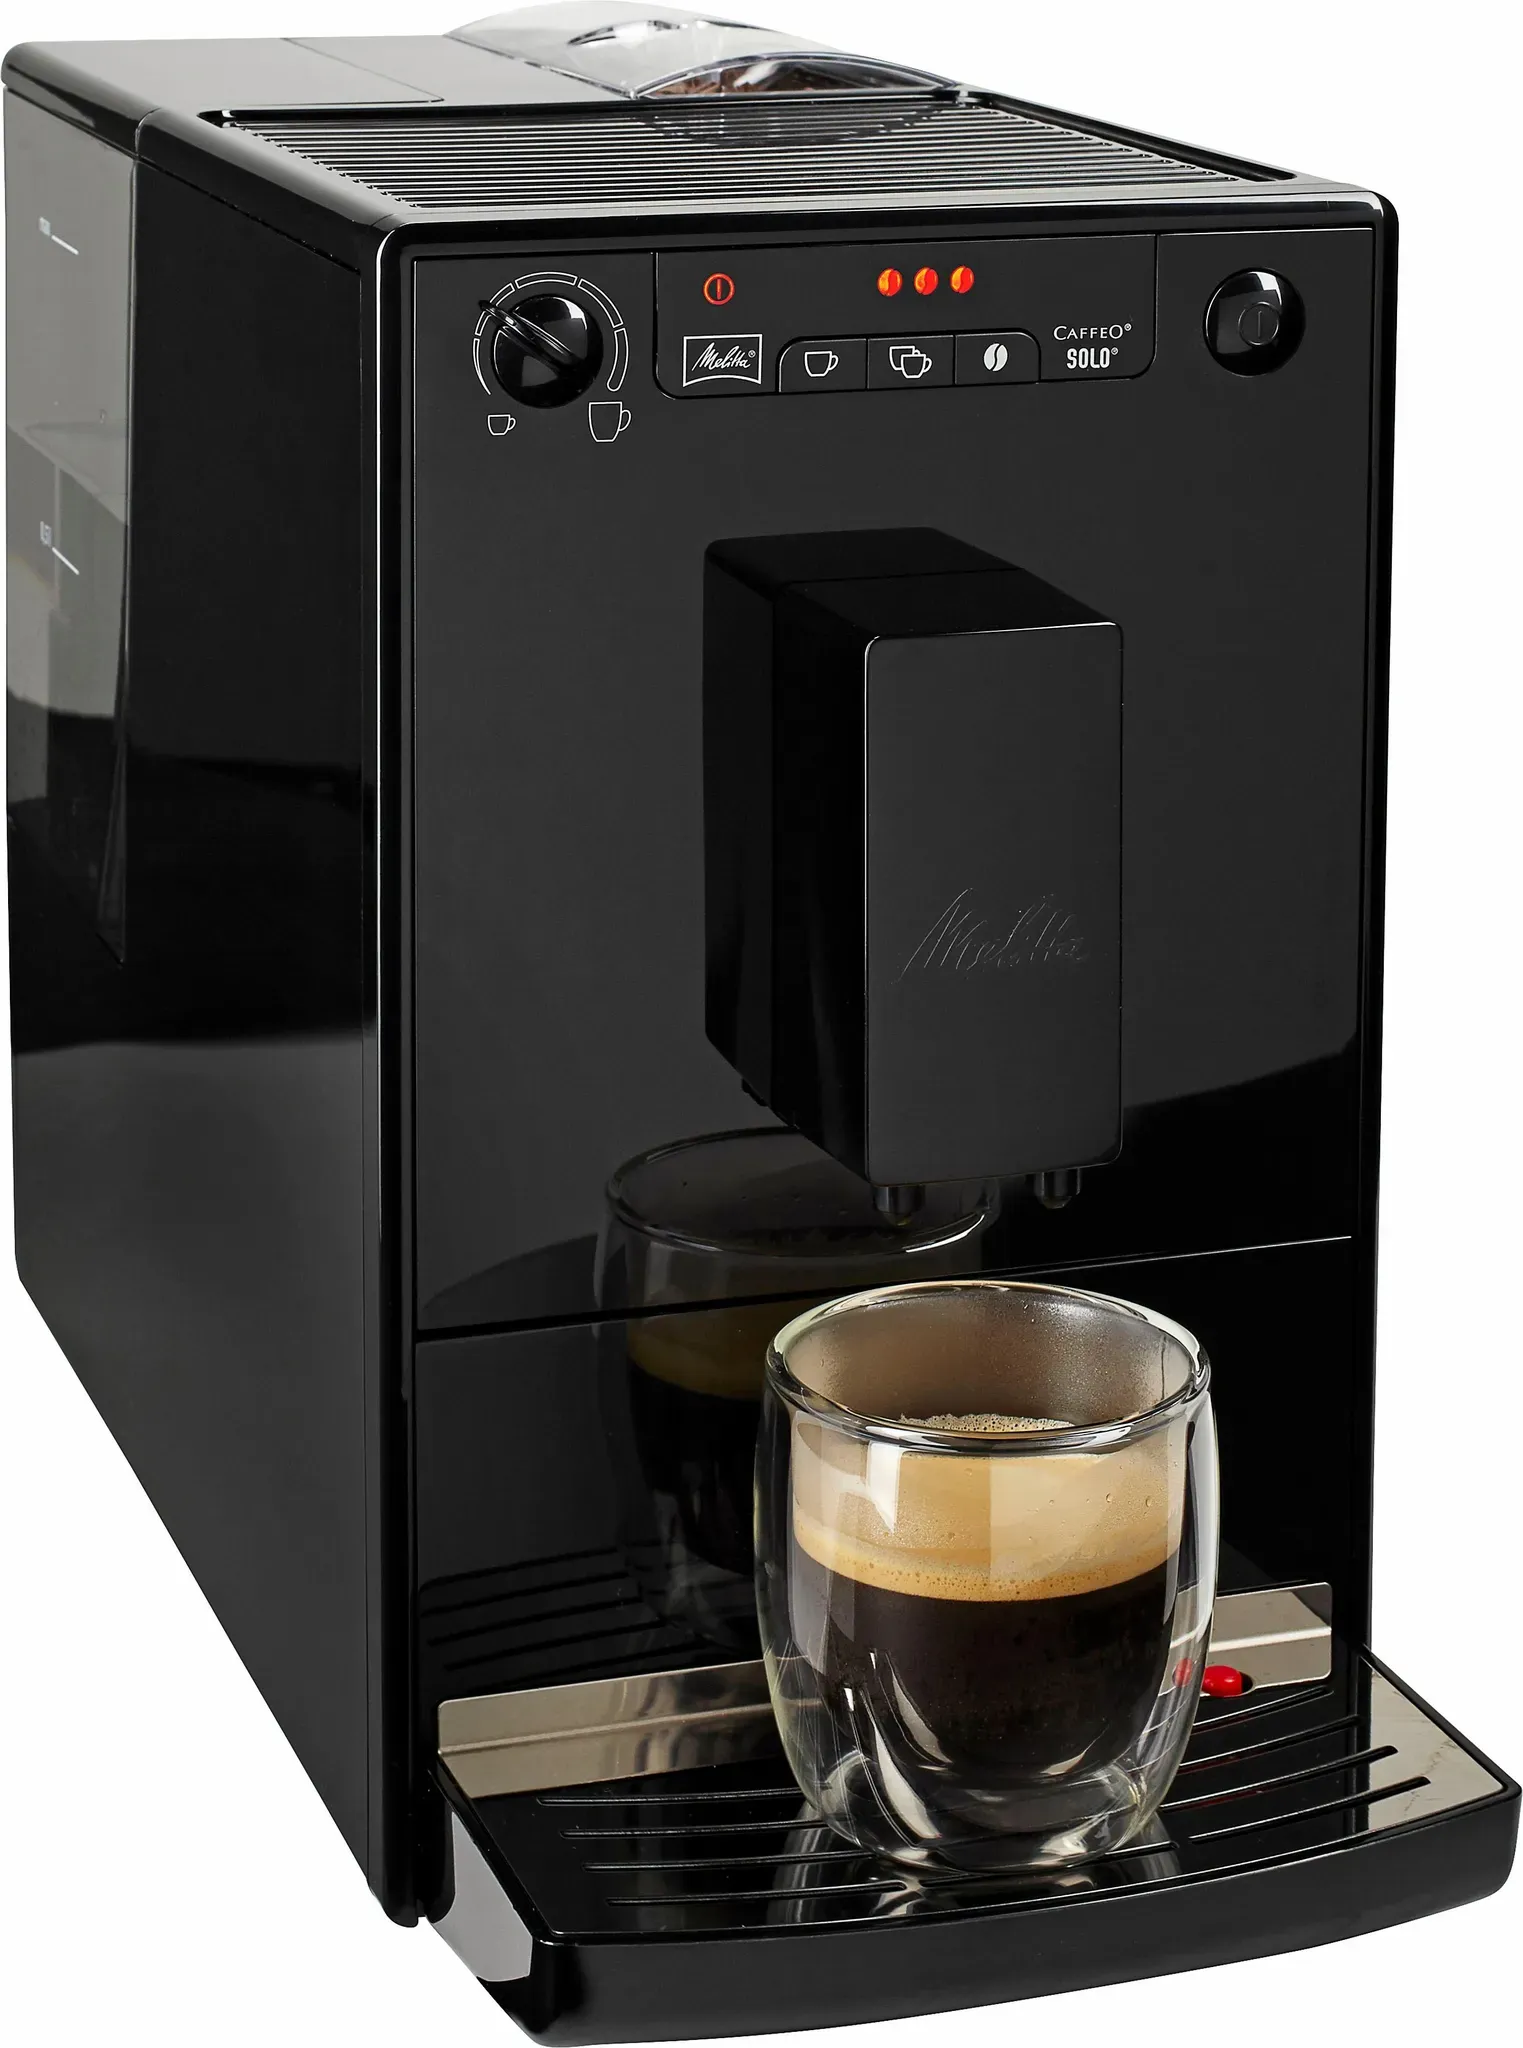 MELITTA Kaffeevollautomat "Solo E950-322, pure black" Kaffeevollautomaten aromatischer Kaffee & Espresso bei nur 20 cm Breite schwarz Kaffeevollautomat